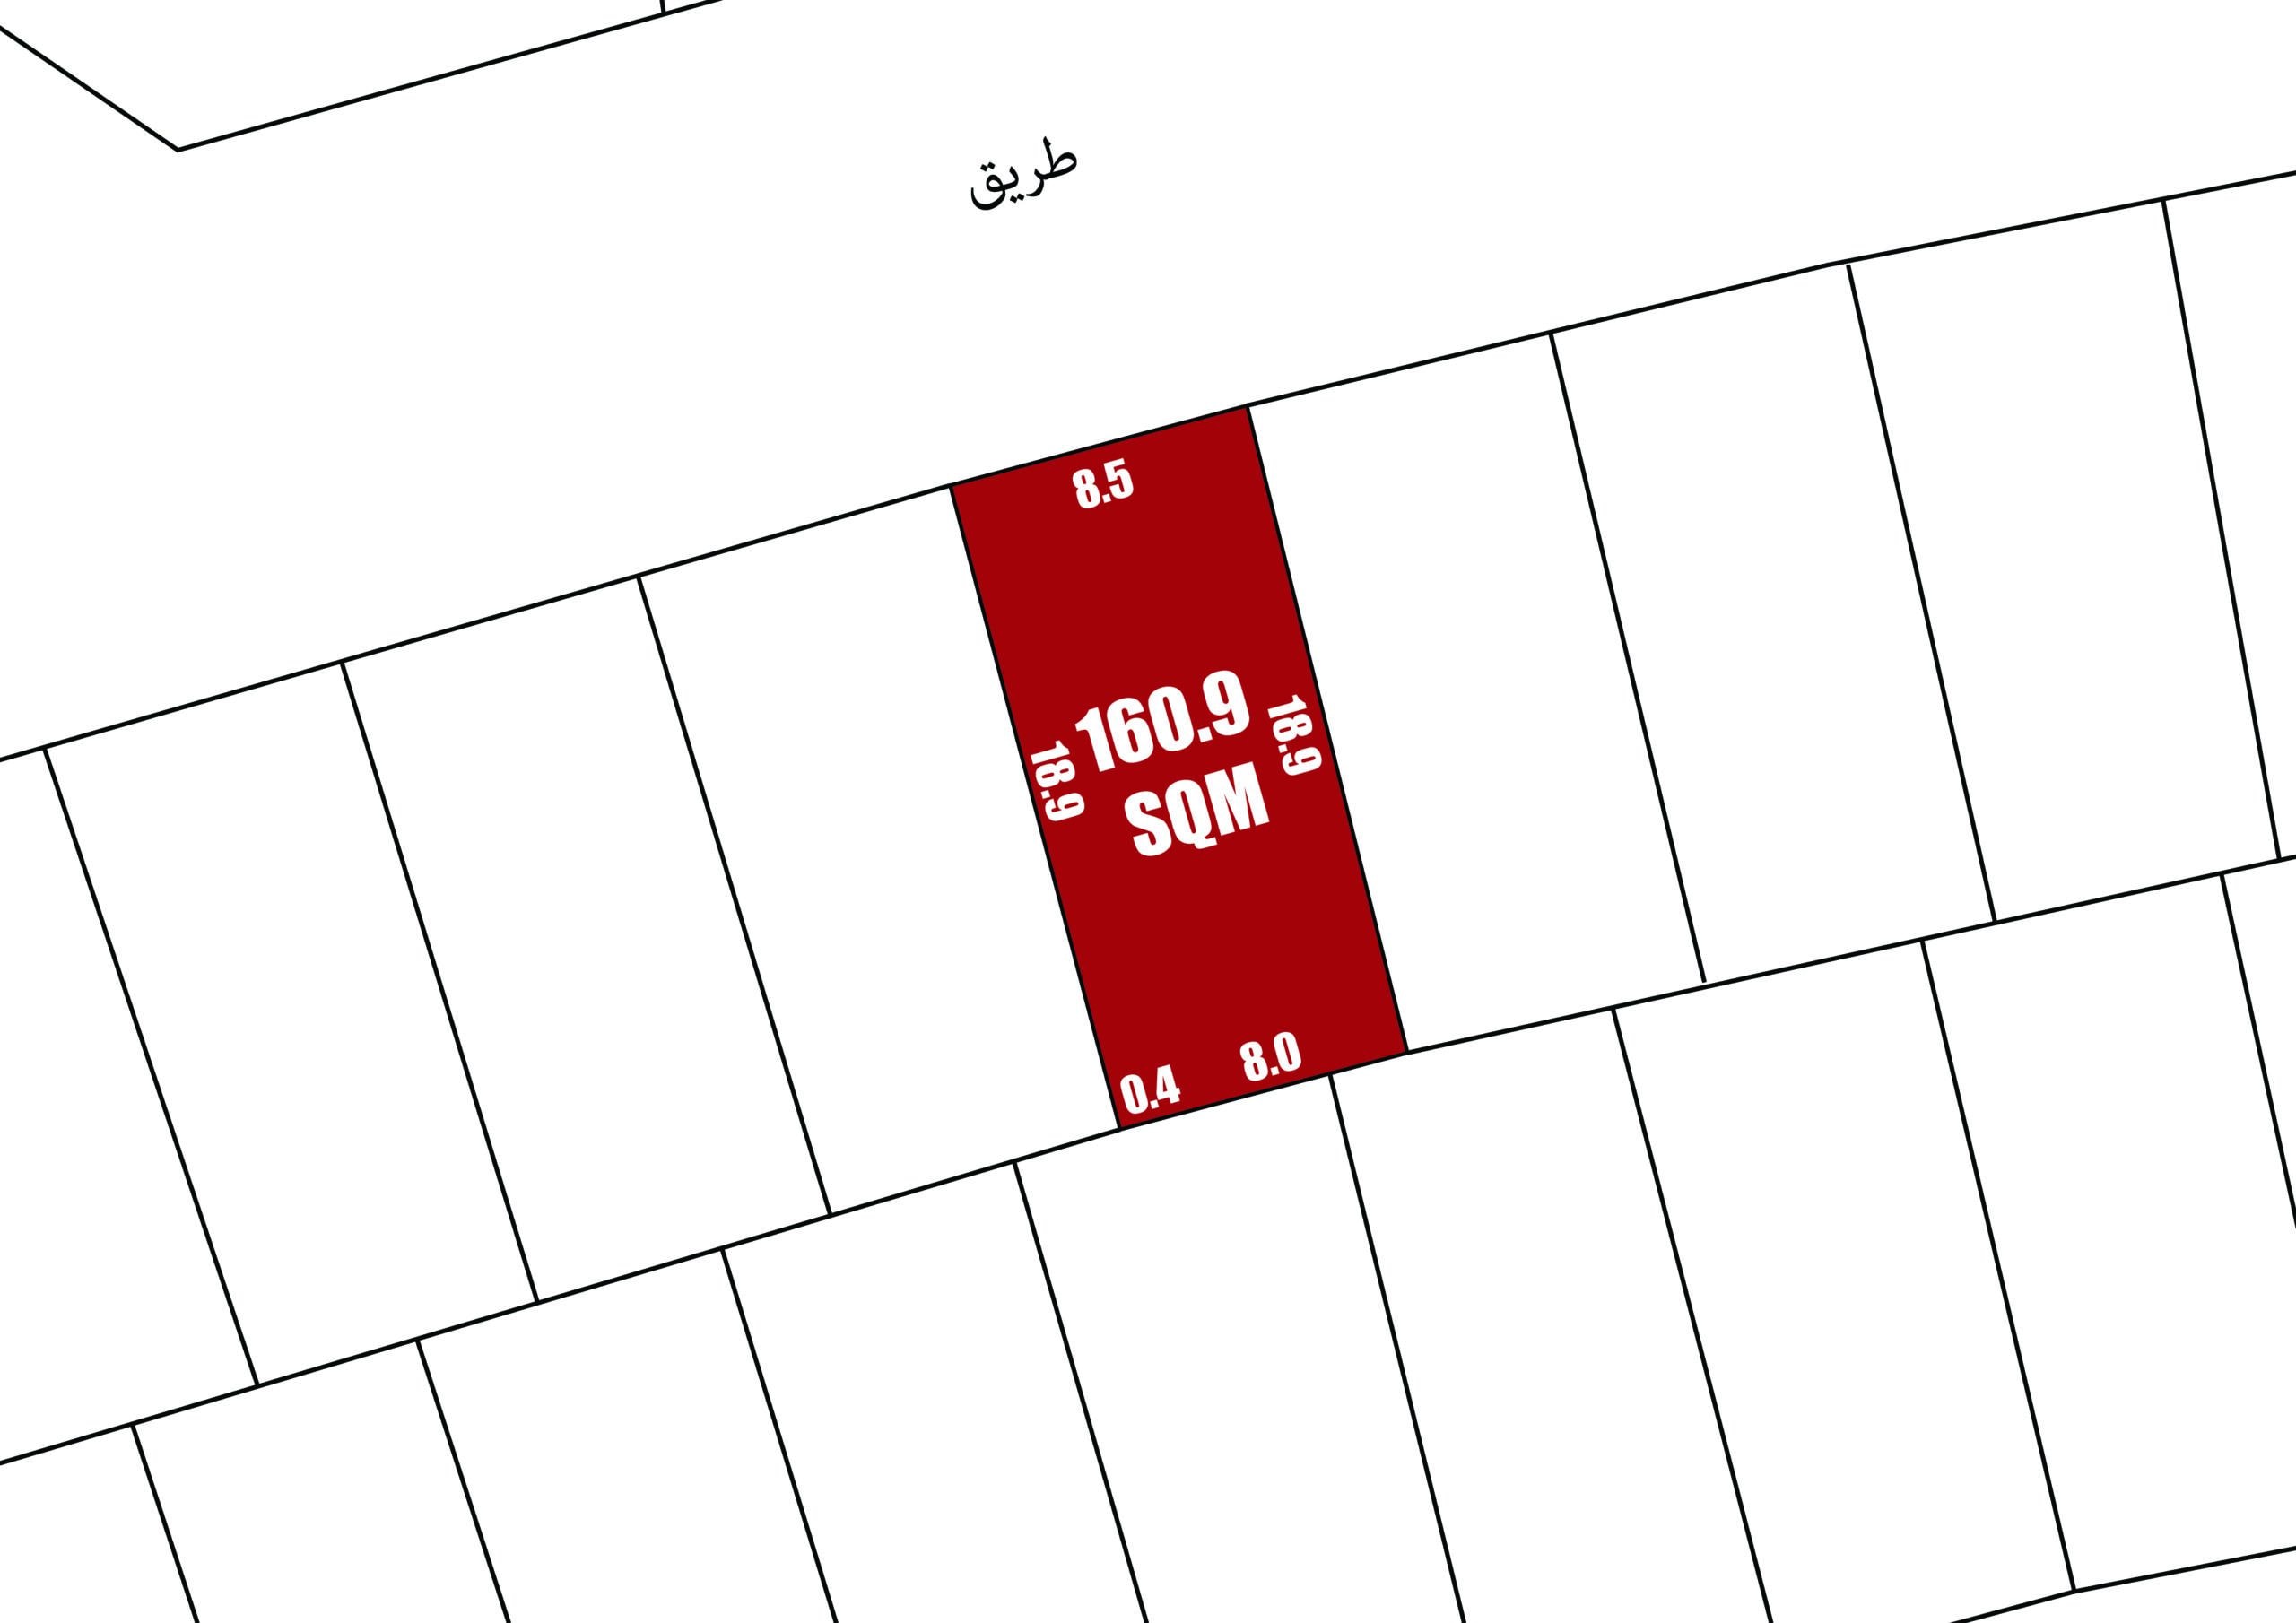 RHA Land for Sale in Hamala | 160.9 SQM